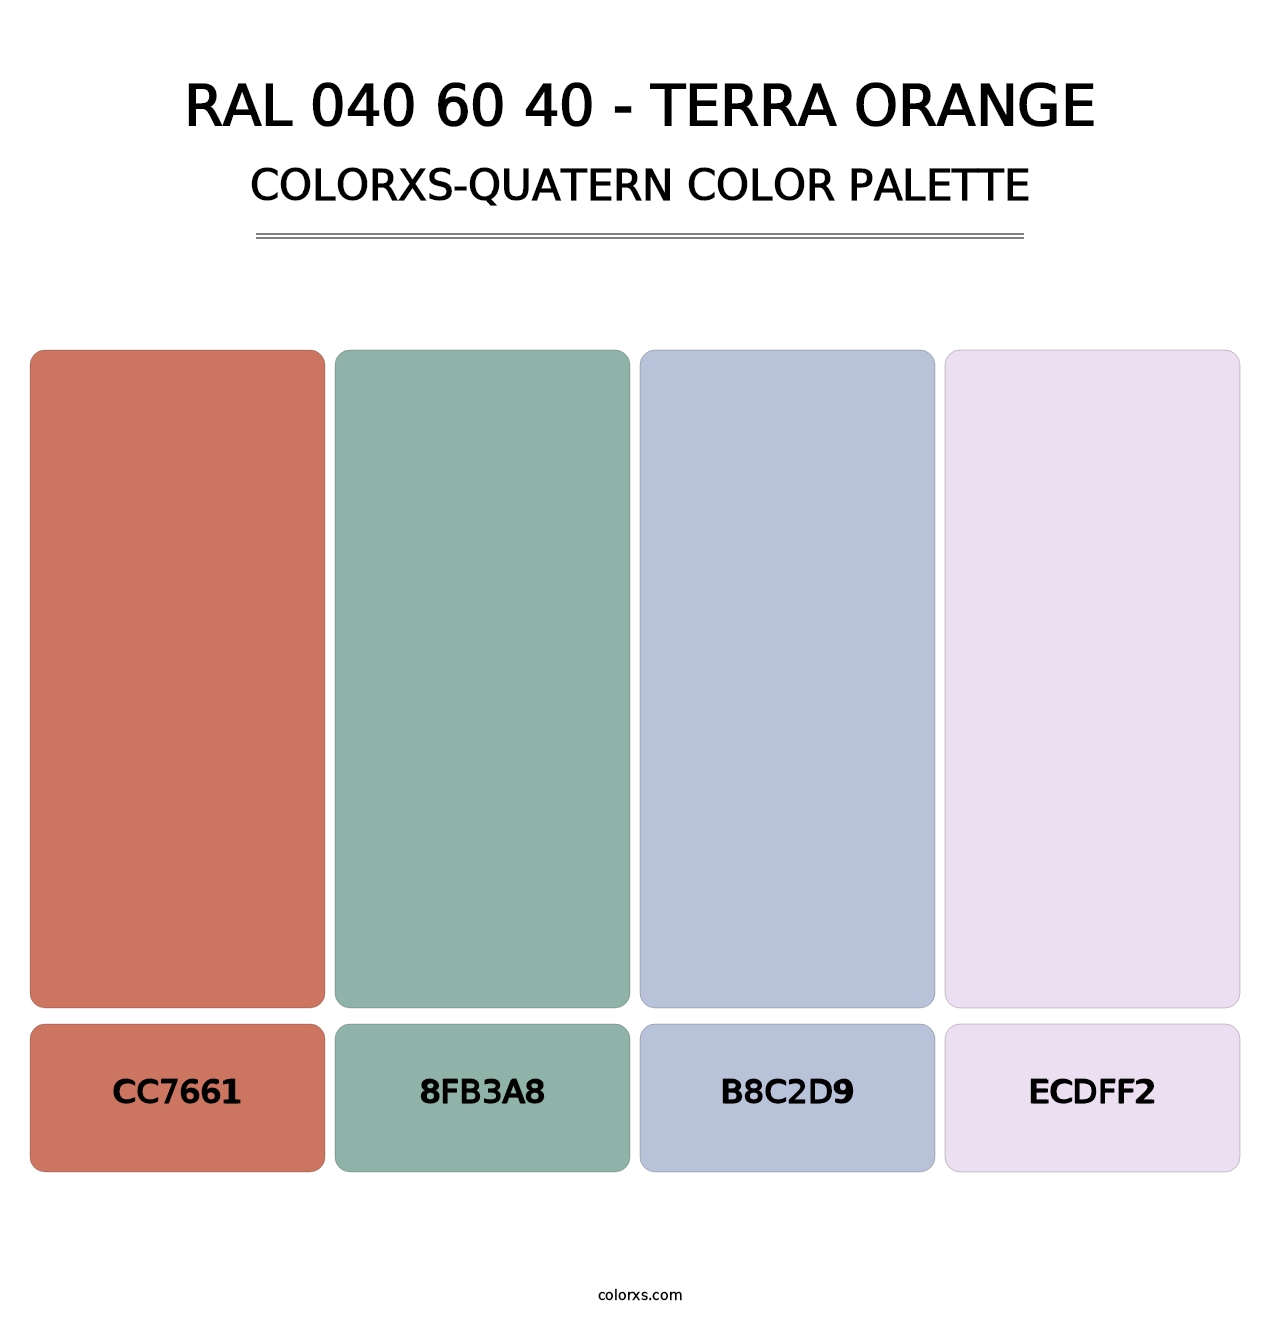 RAL 040 60 40 - Terra Orange - Colorxs Quatern Palette